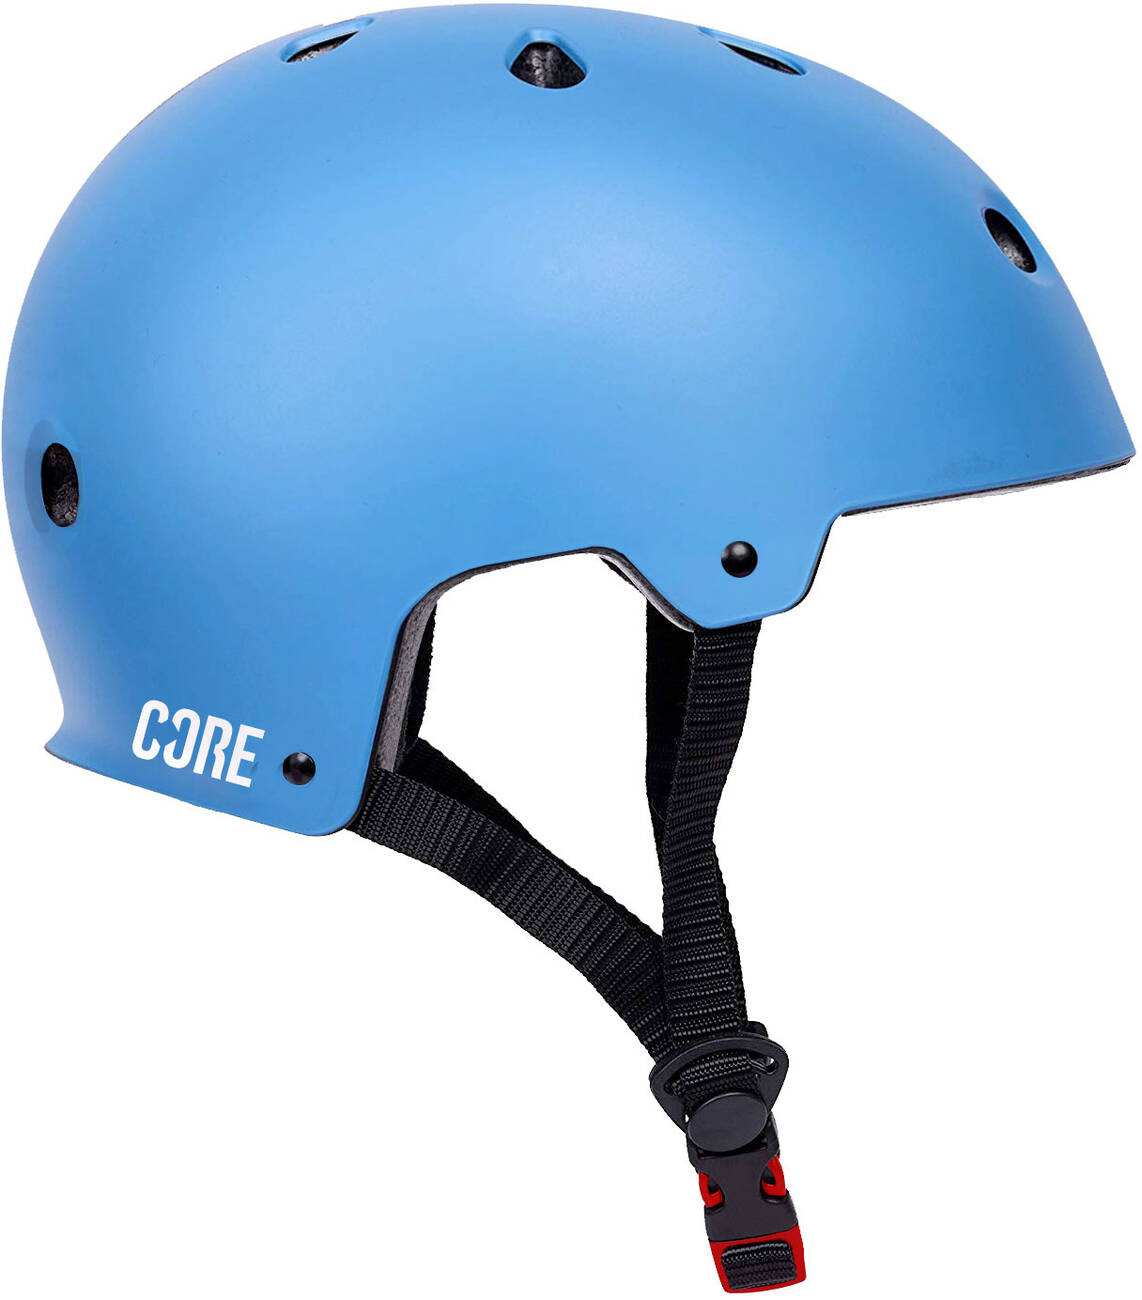 CORE Action Sports helmet skate and bike helmet blue XS-S